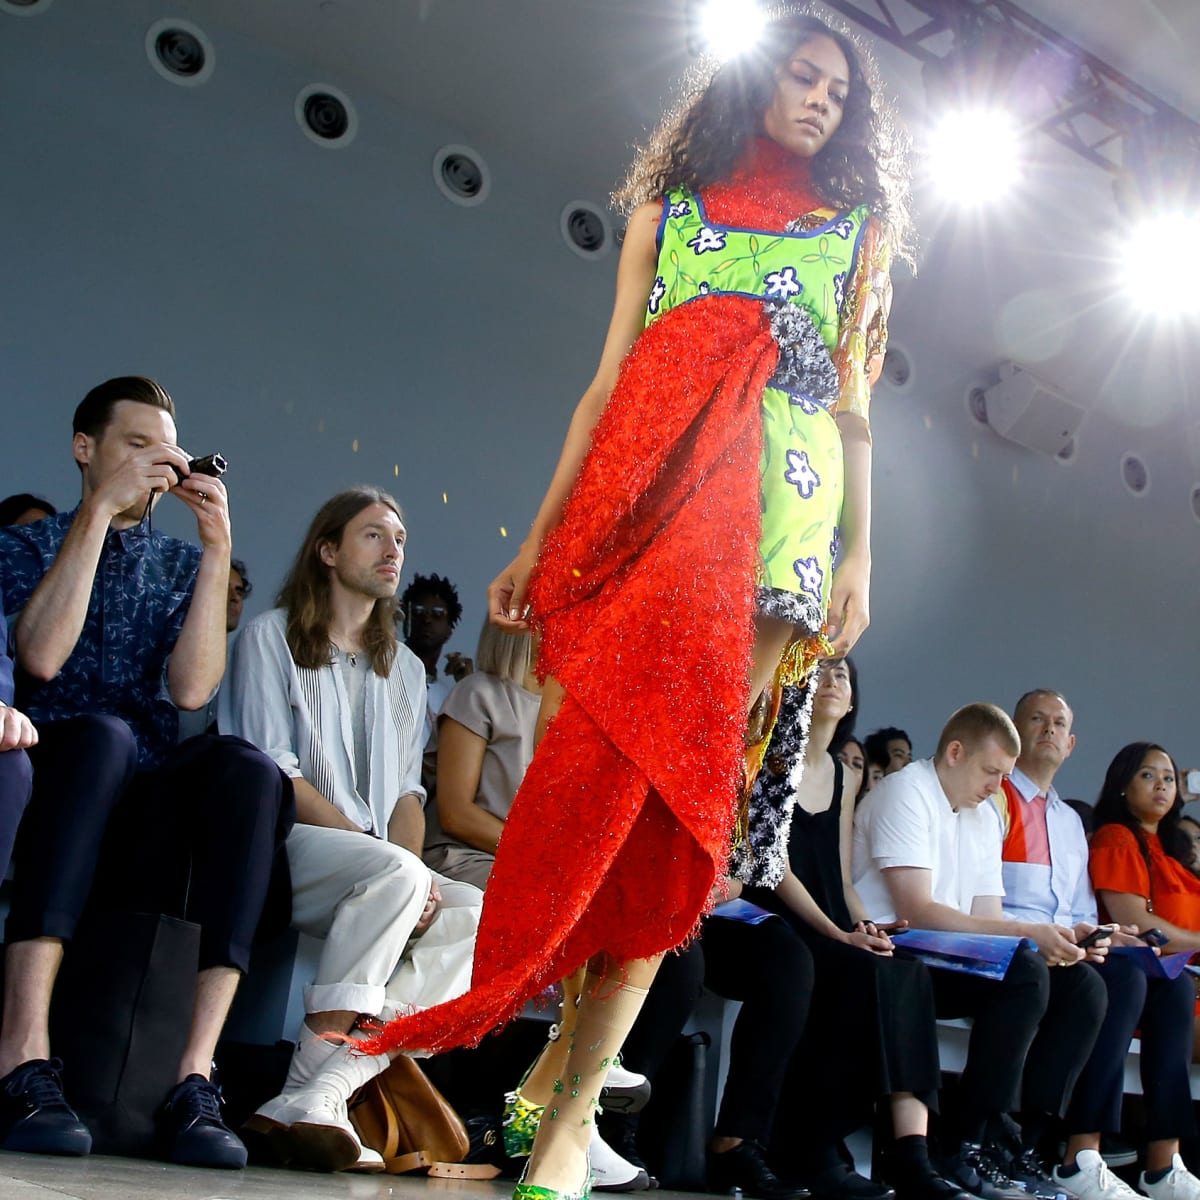 Fashion design schools in new york - europefoo